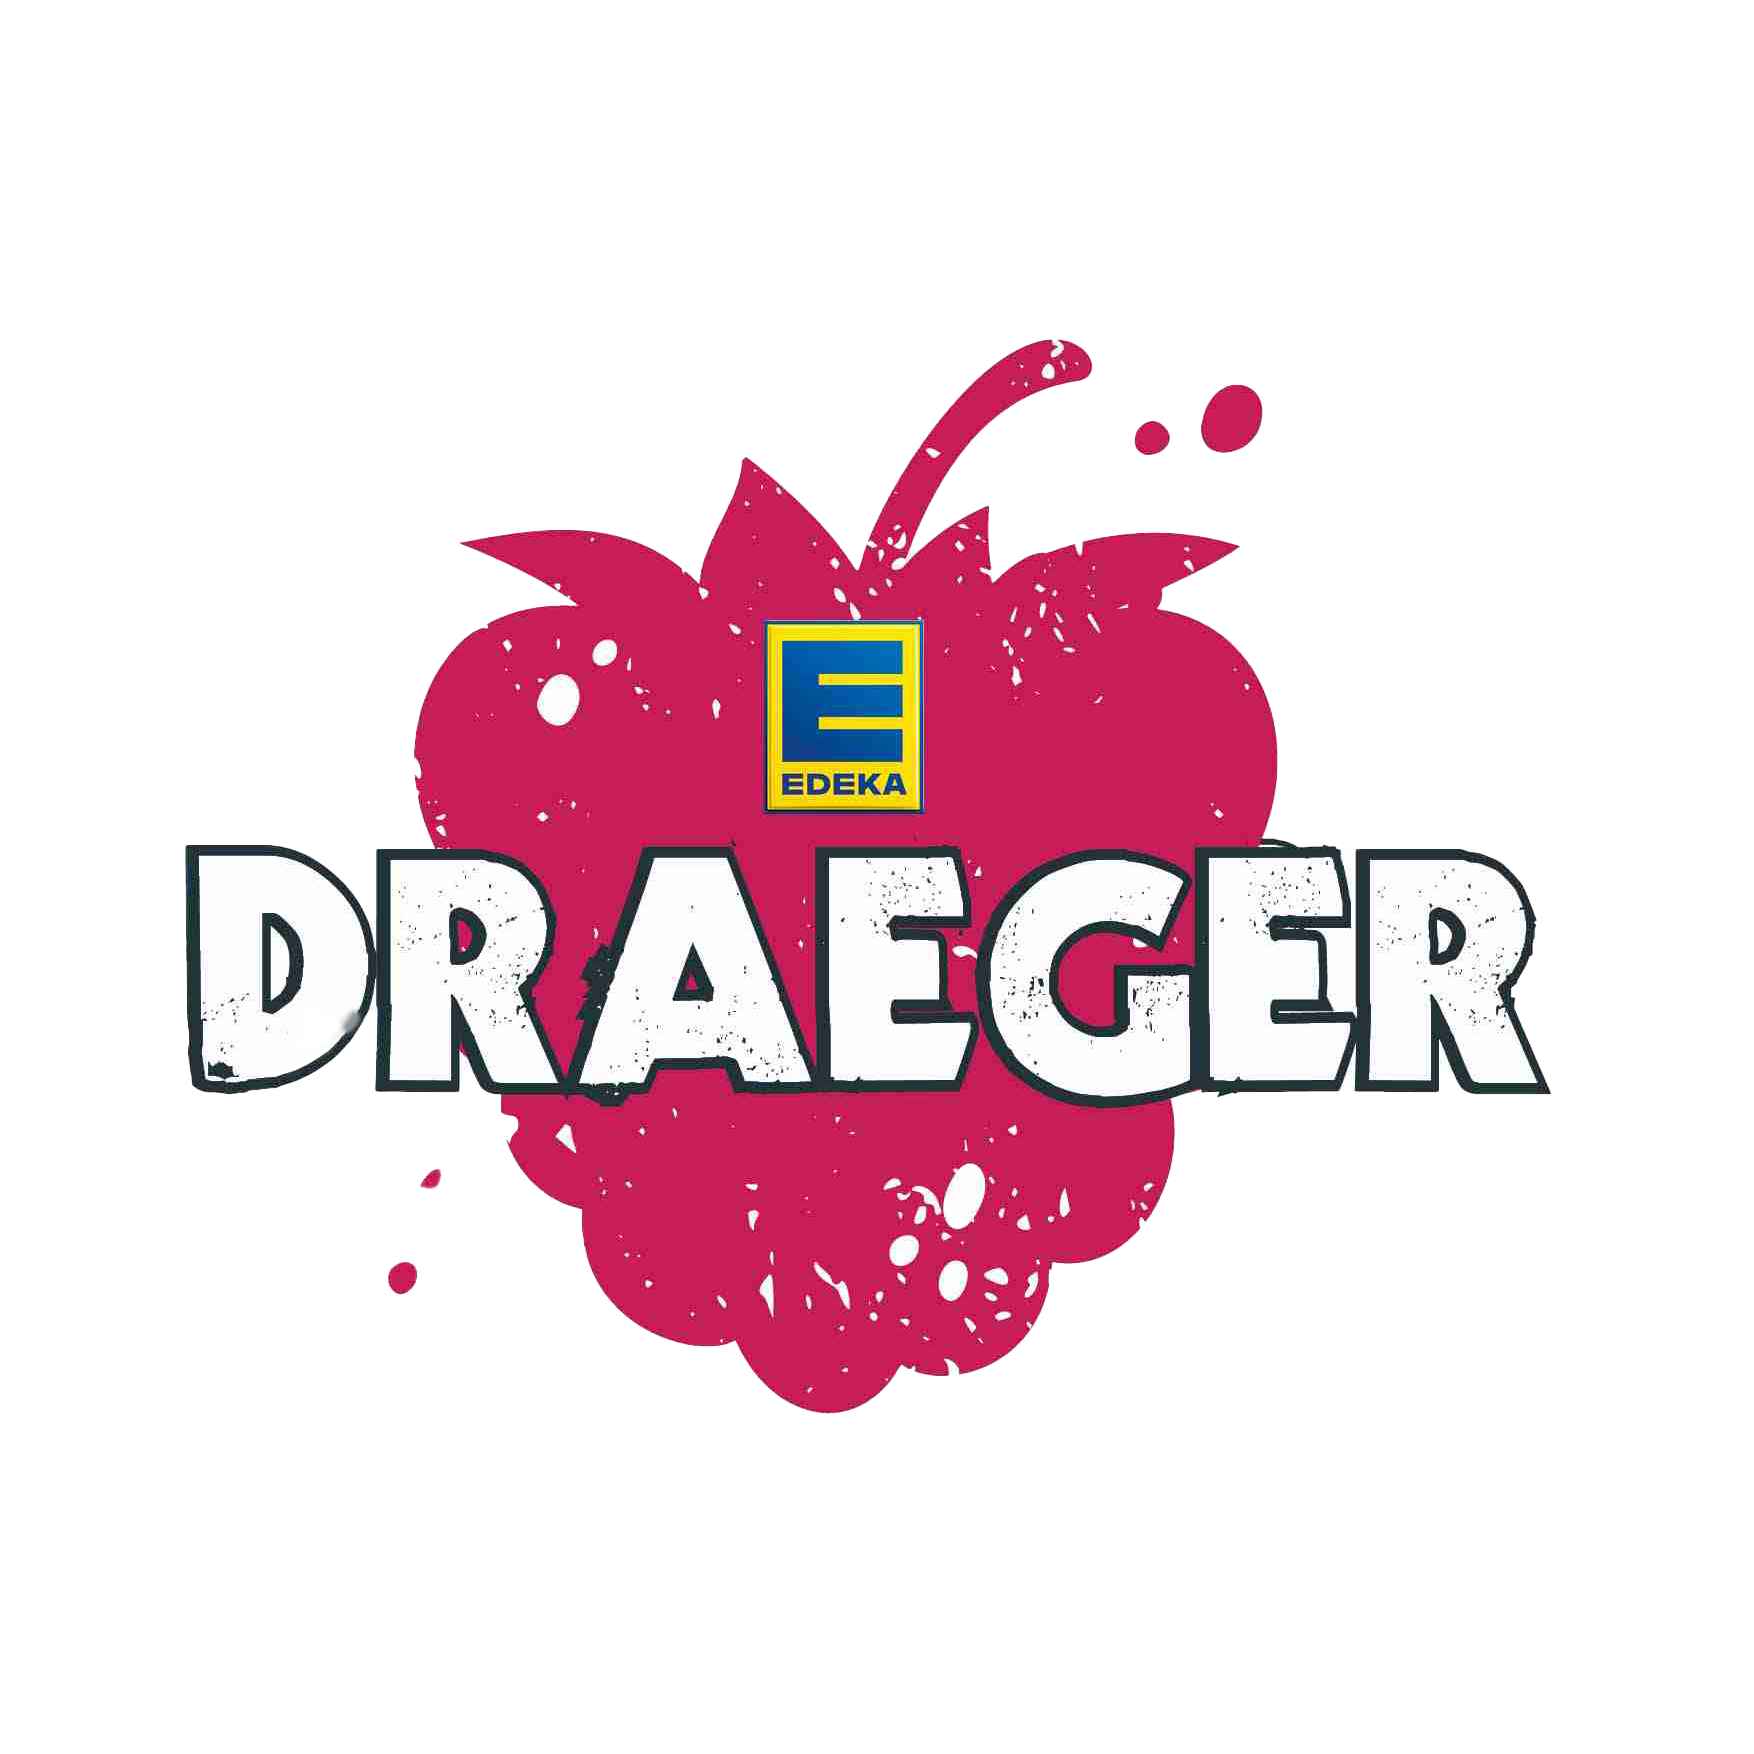 EDEKA Draeger in Uelzen Logo